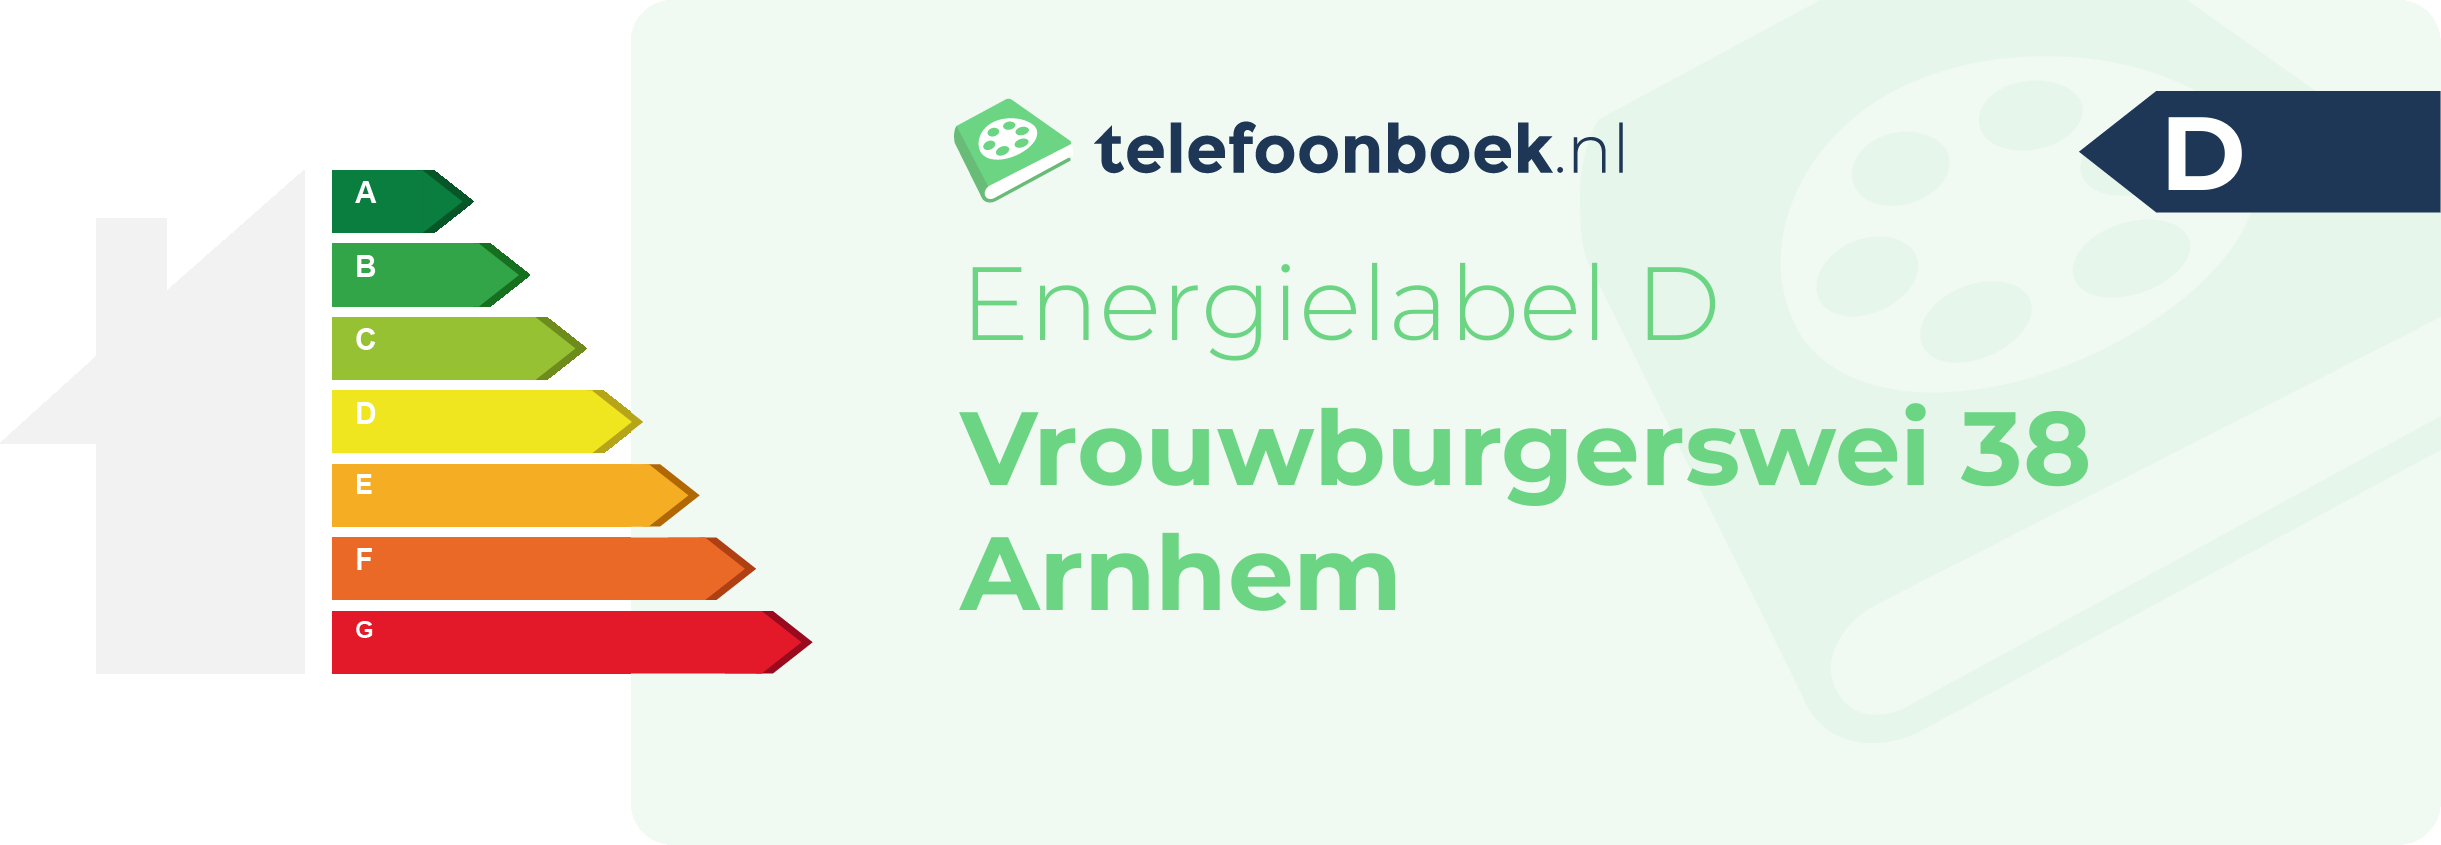 Energielabel Vrouwburgerswei 38 Arnhem